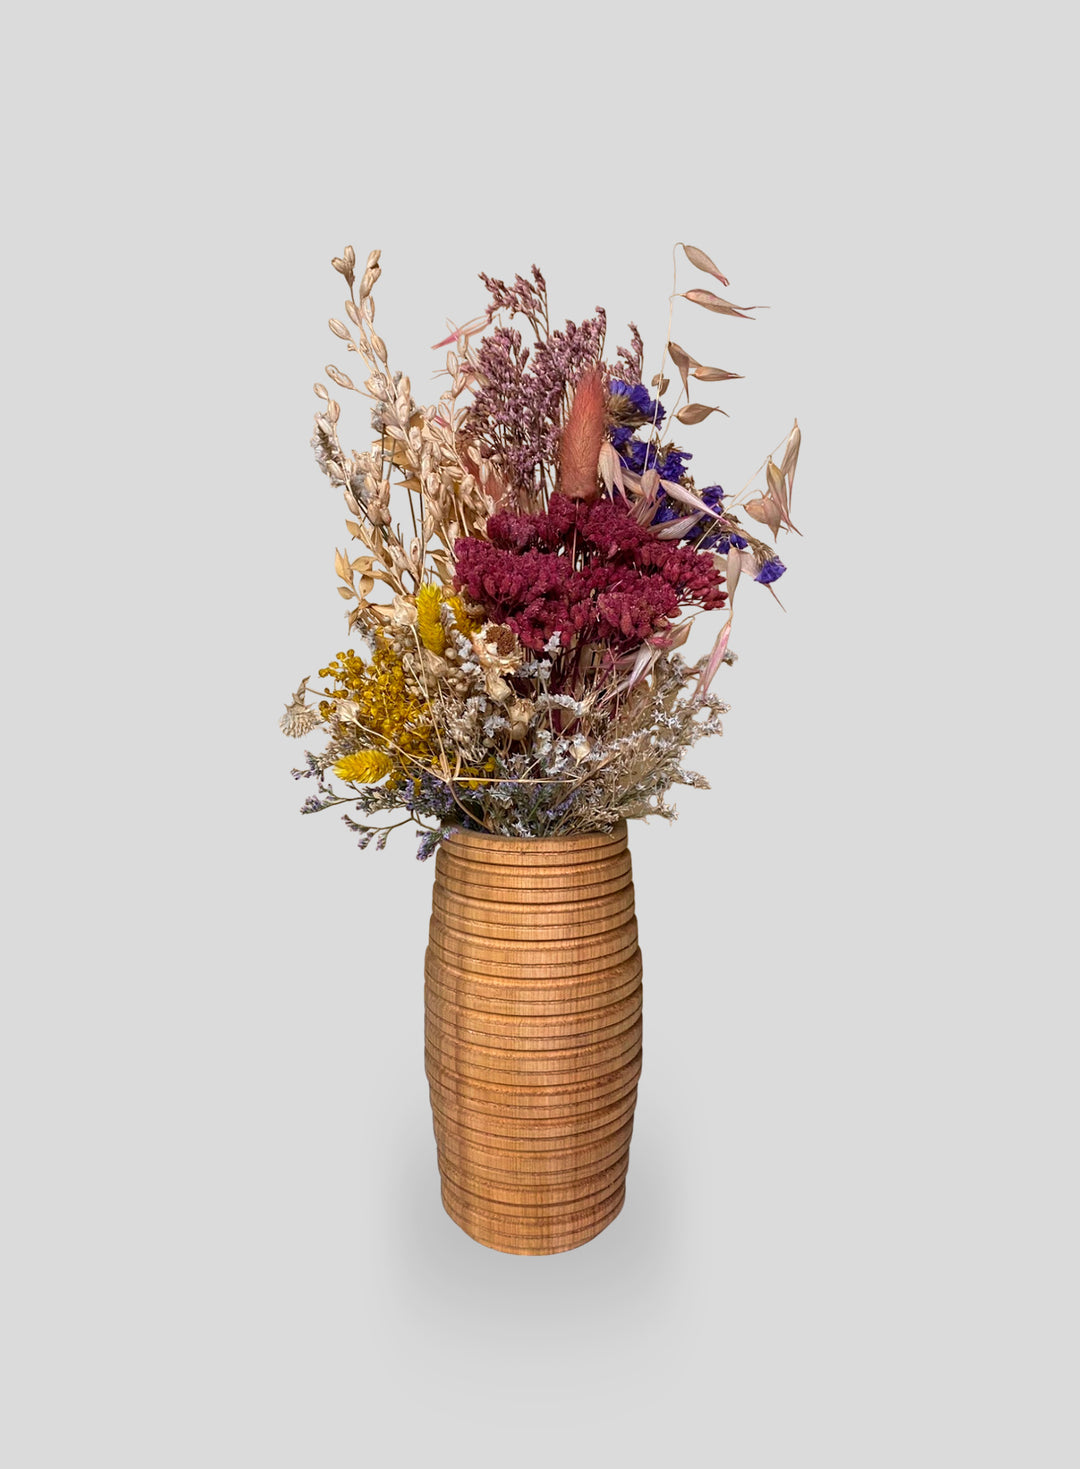 The Beehive Vase in Fireland Cherry